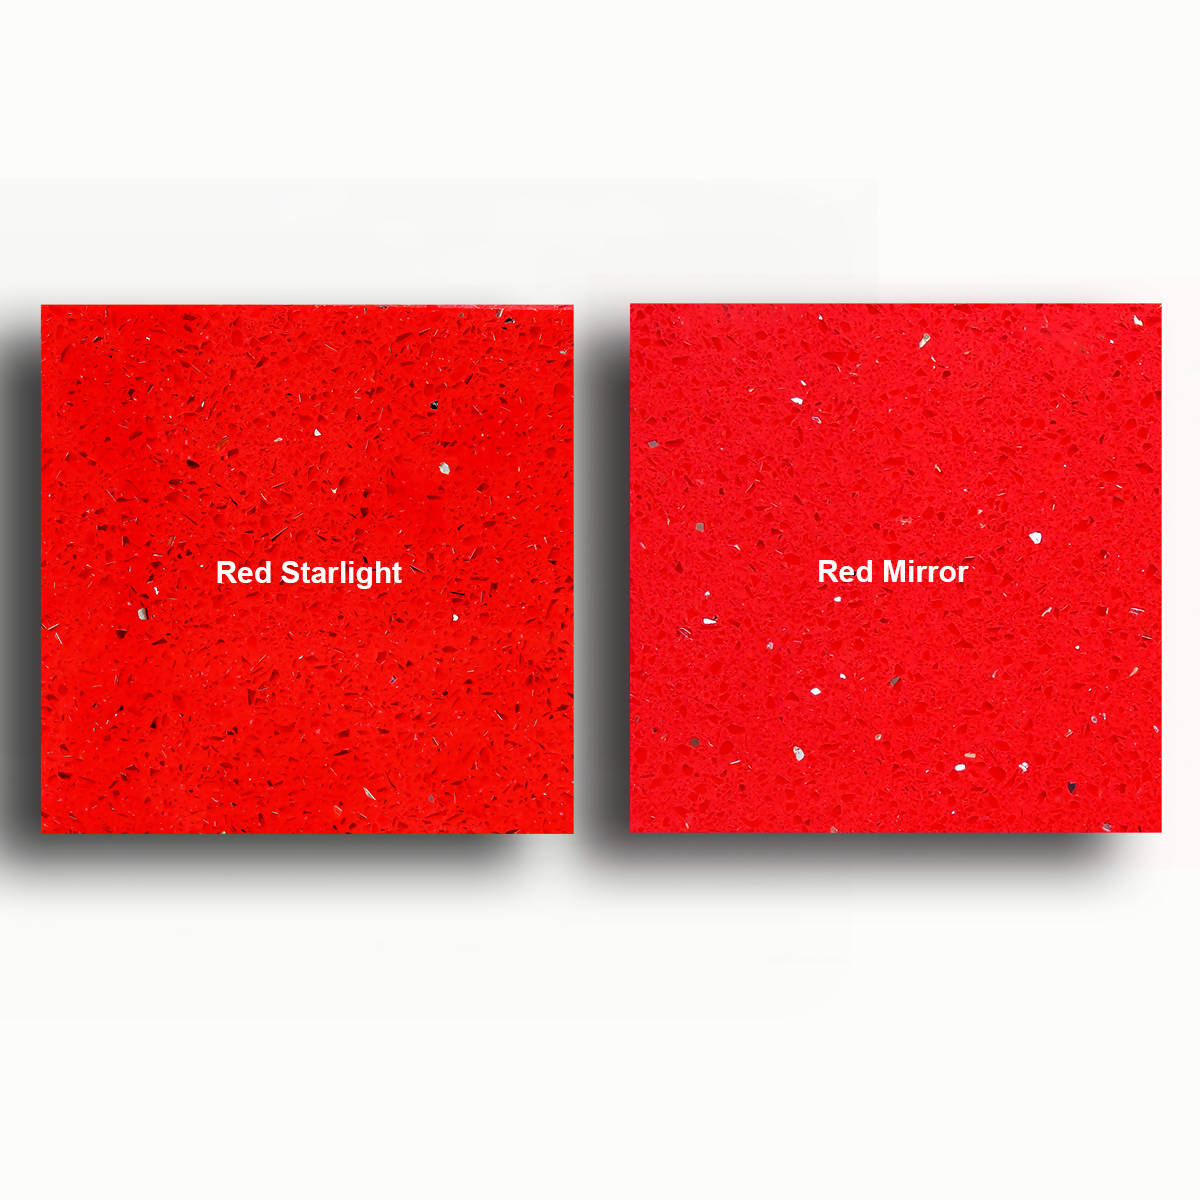 RED STARLIGHT QUARTZ,Quartz,Work-Tops,www.work-tops.com